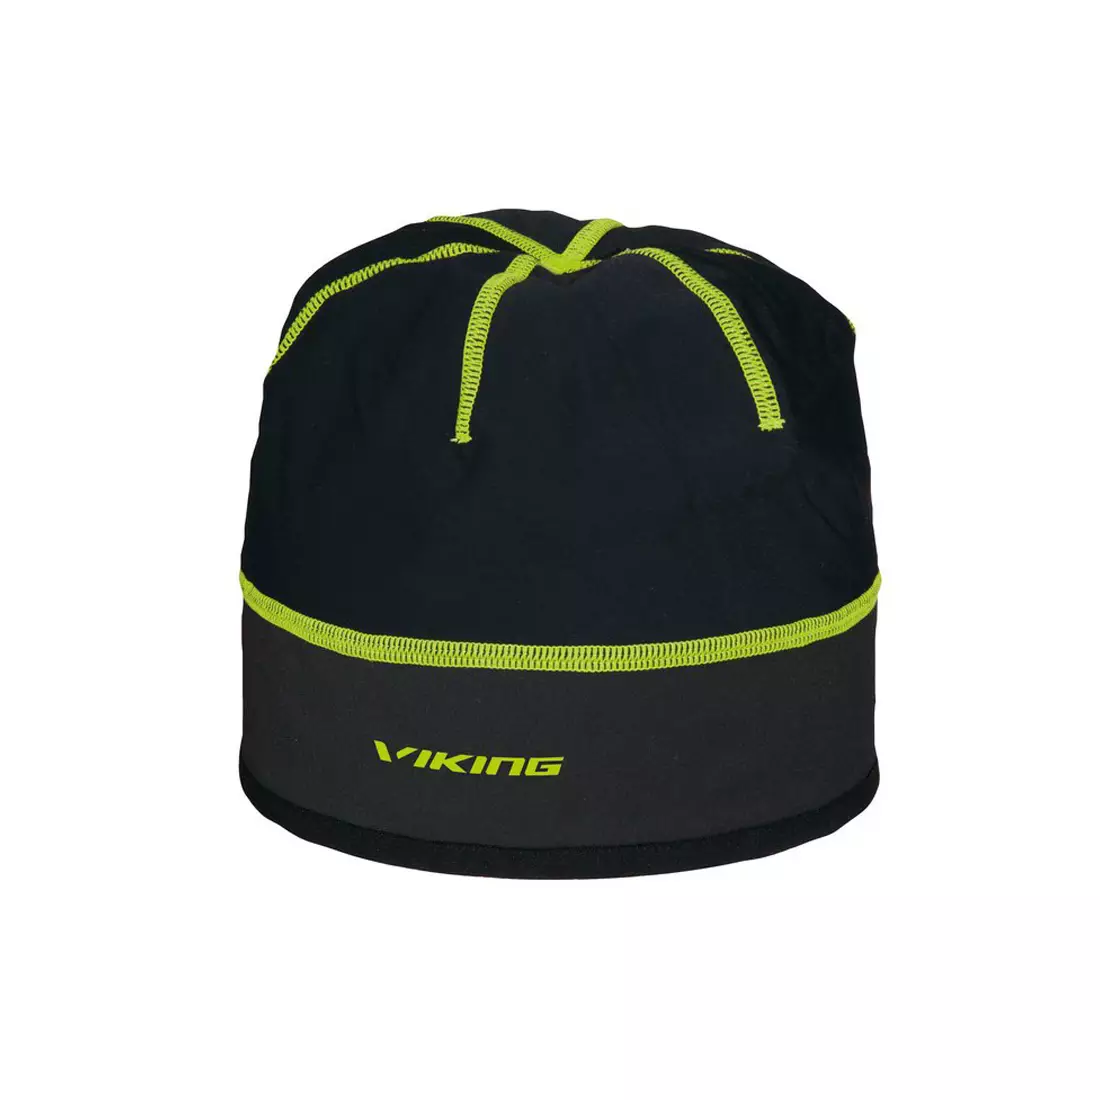 VIKING universal winter hat Palmer GORE-TEX Infinium z Windstopper black-yellow 215/16/2016/64/58